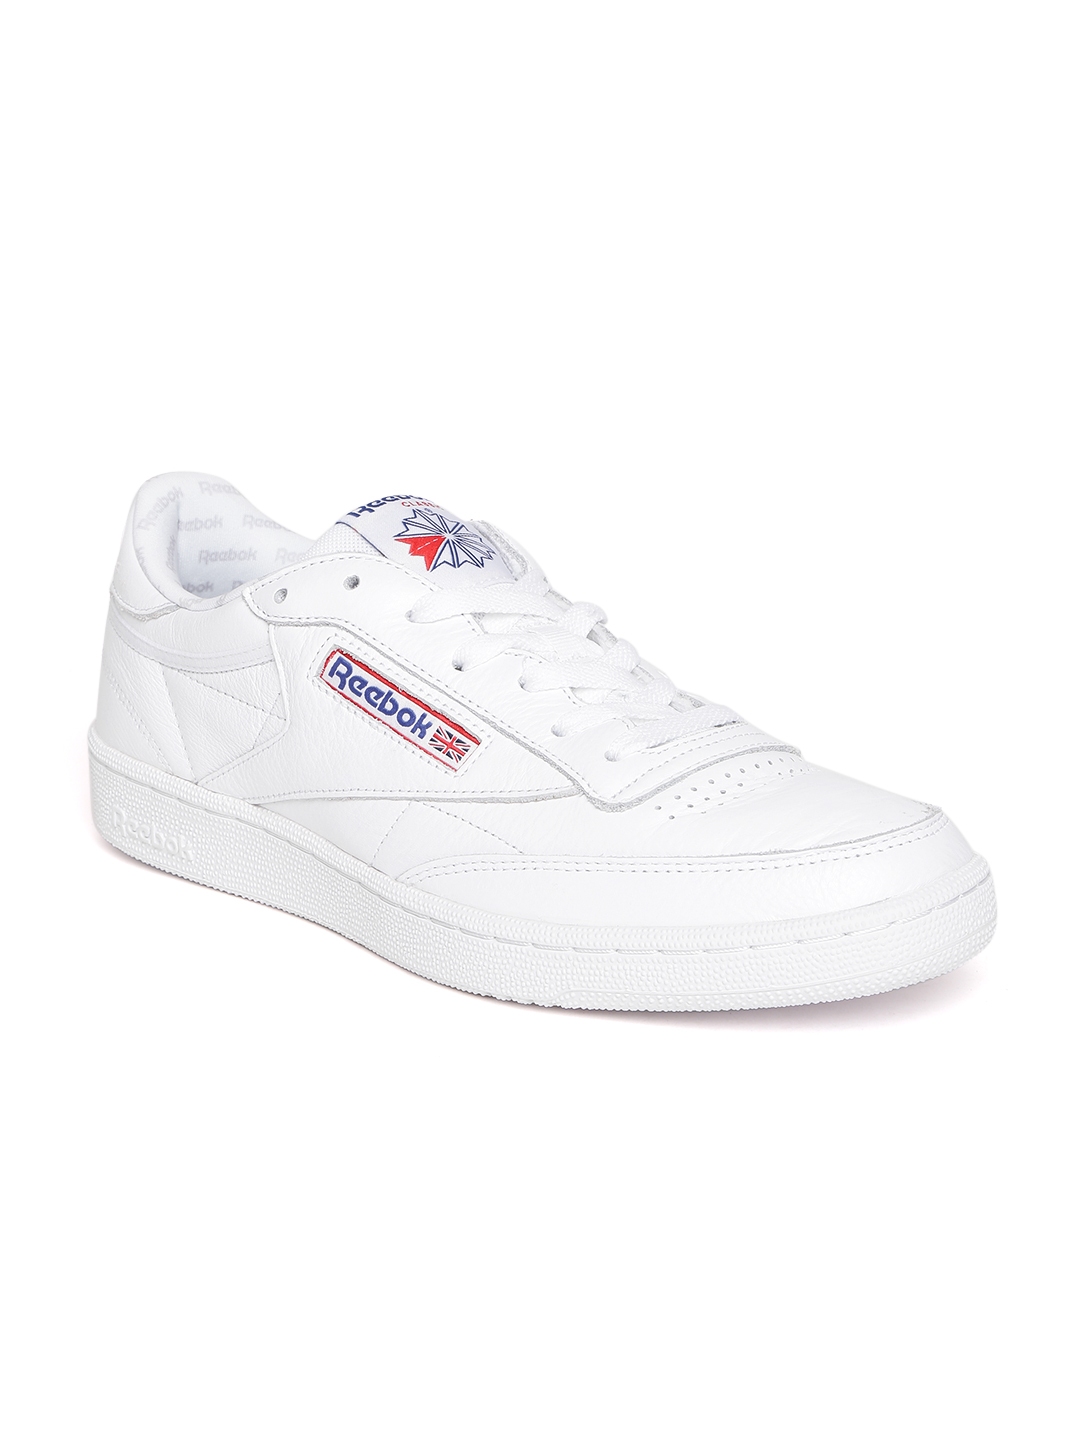 white reebok shoes for men